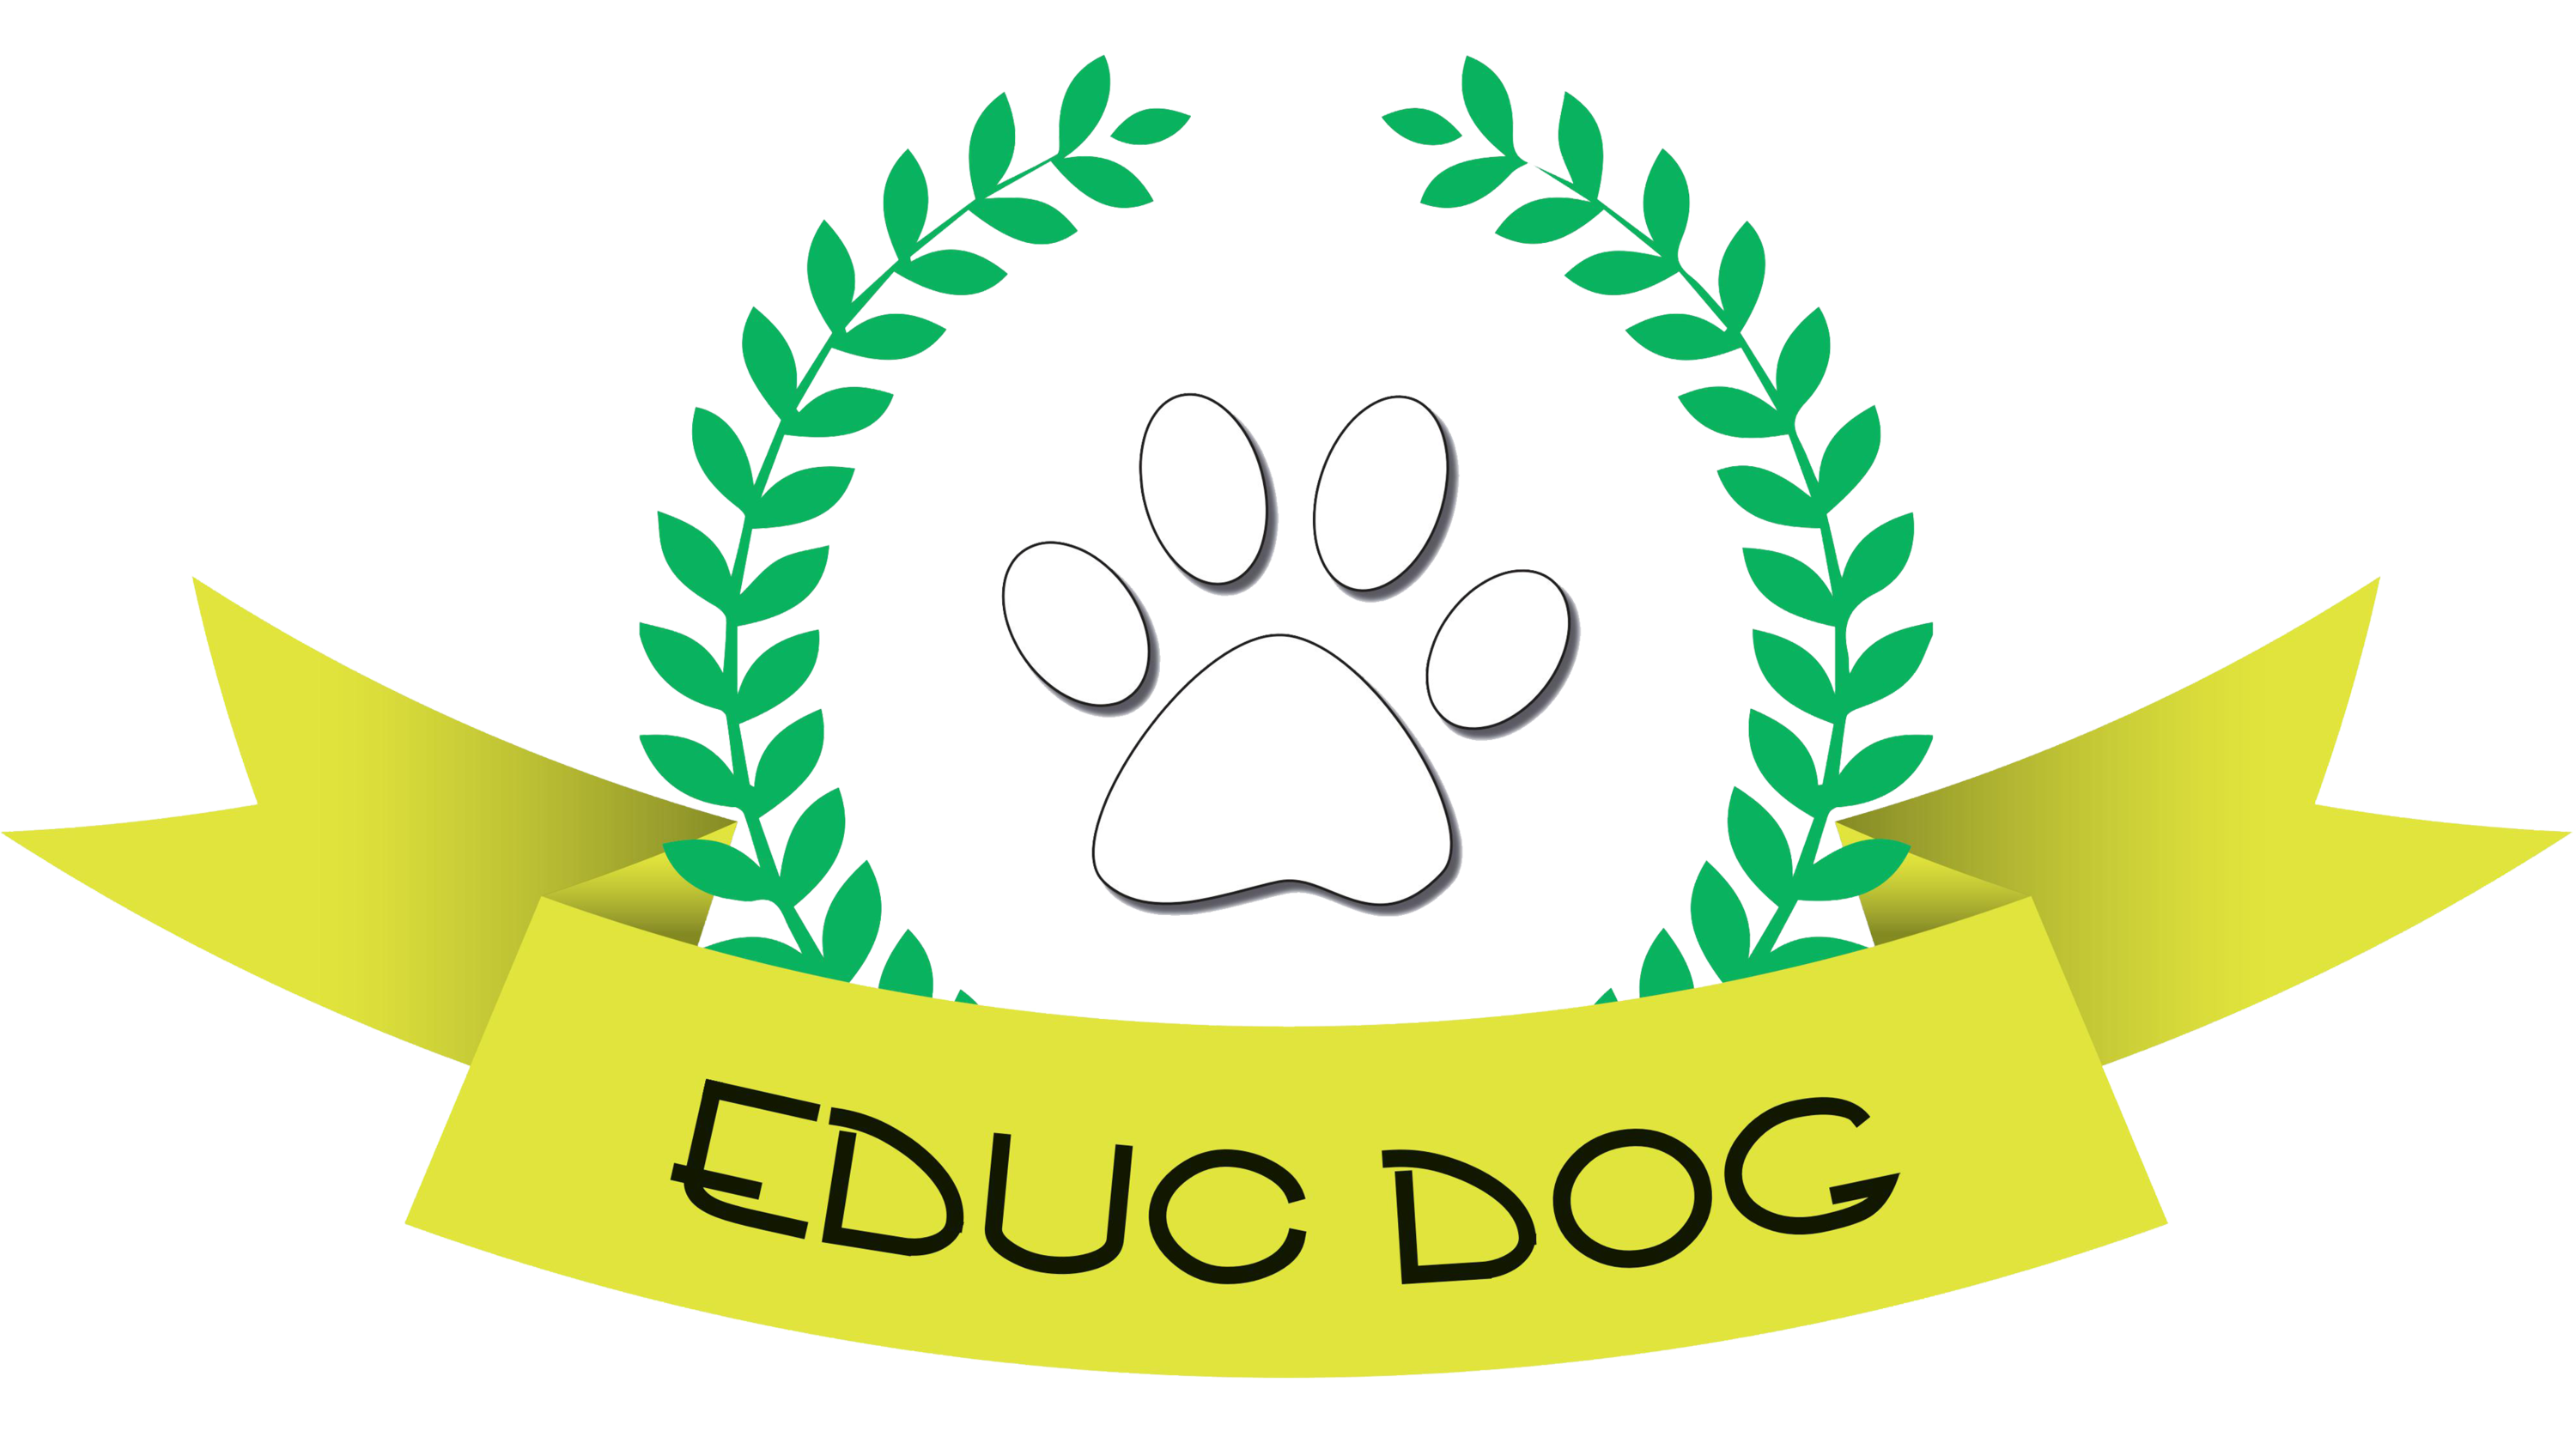 EDUC DOG TESTIMONIALS